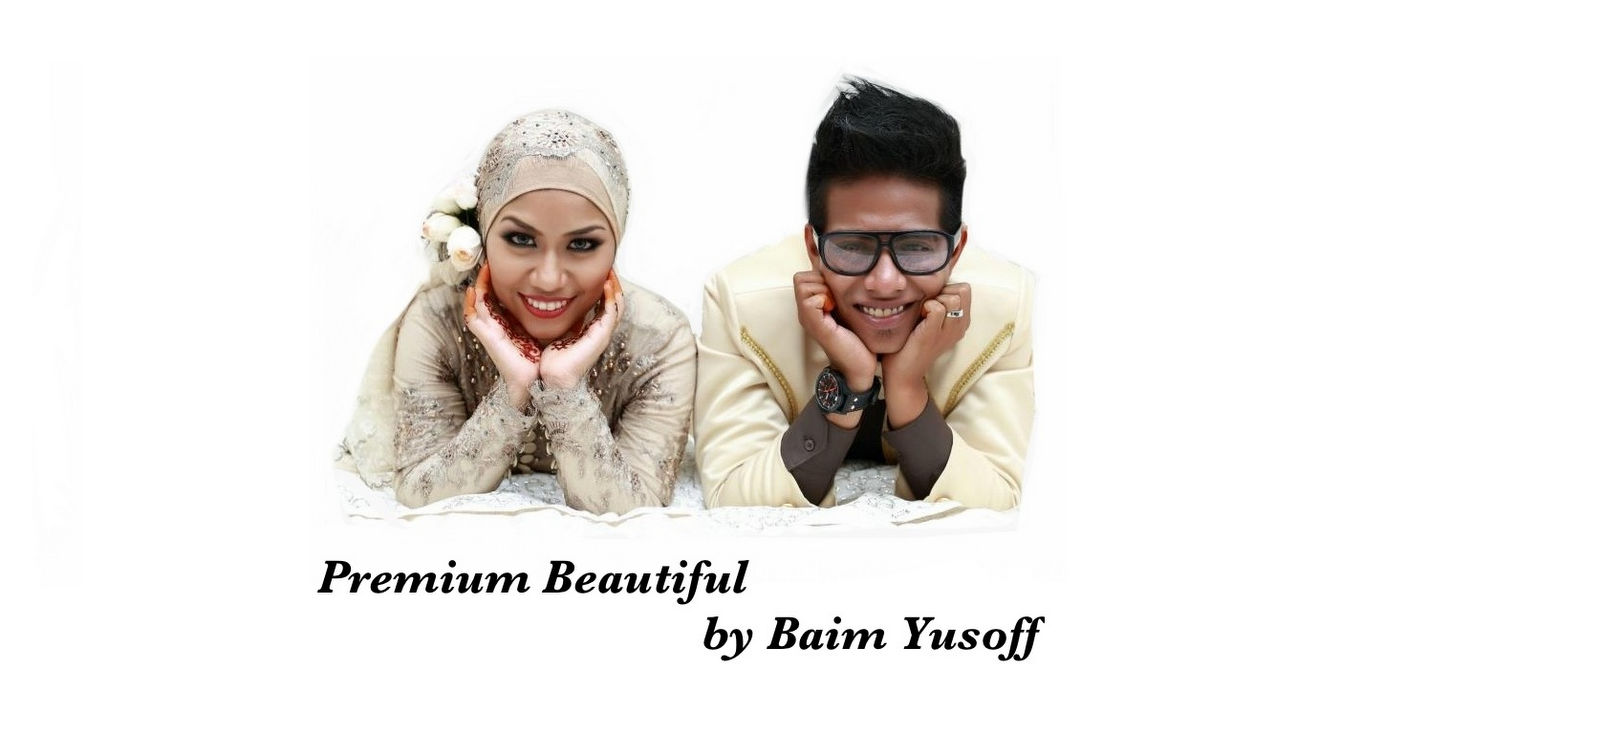 PREMIUM BEAUTIFUL by BAIM YUSOFF